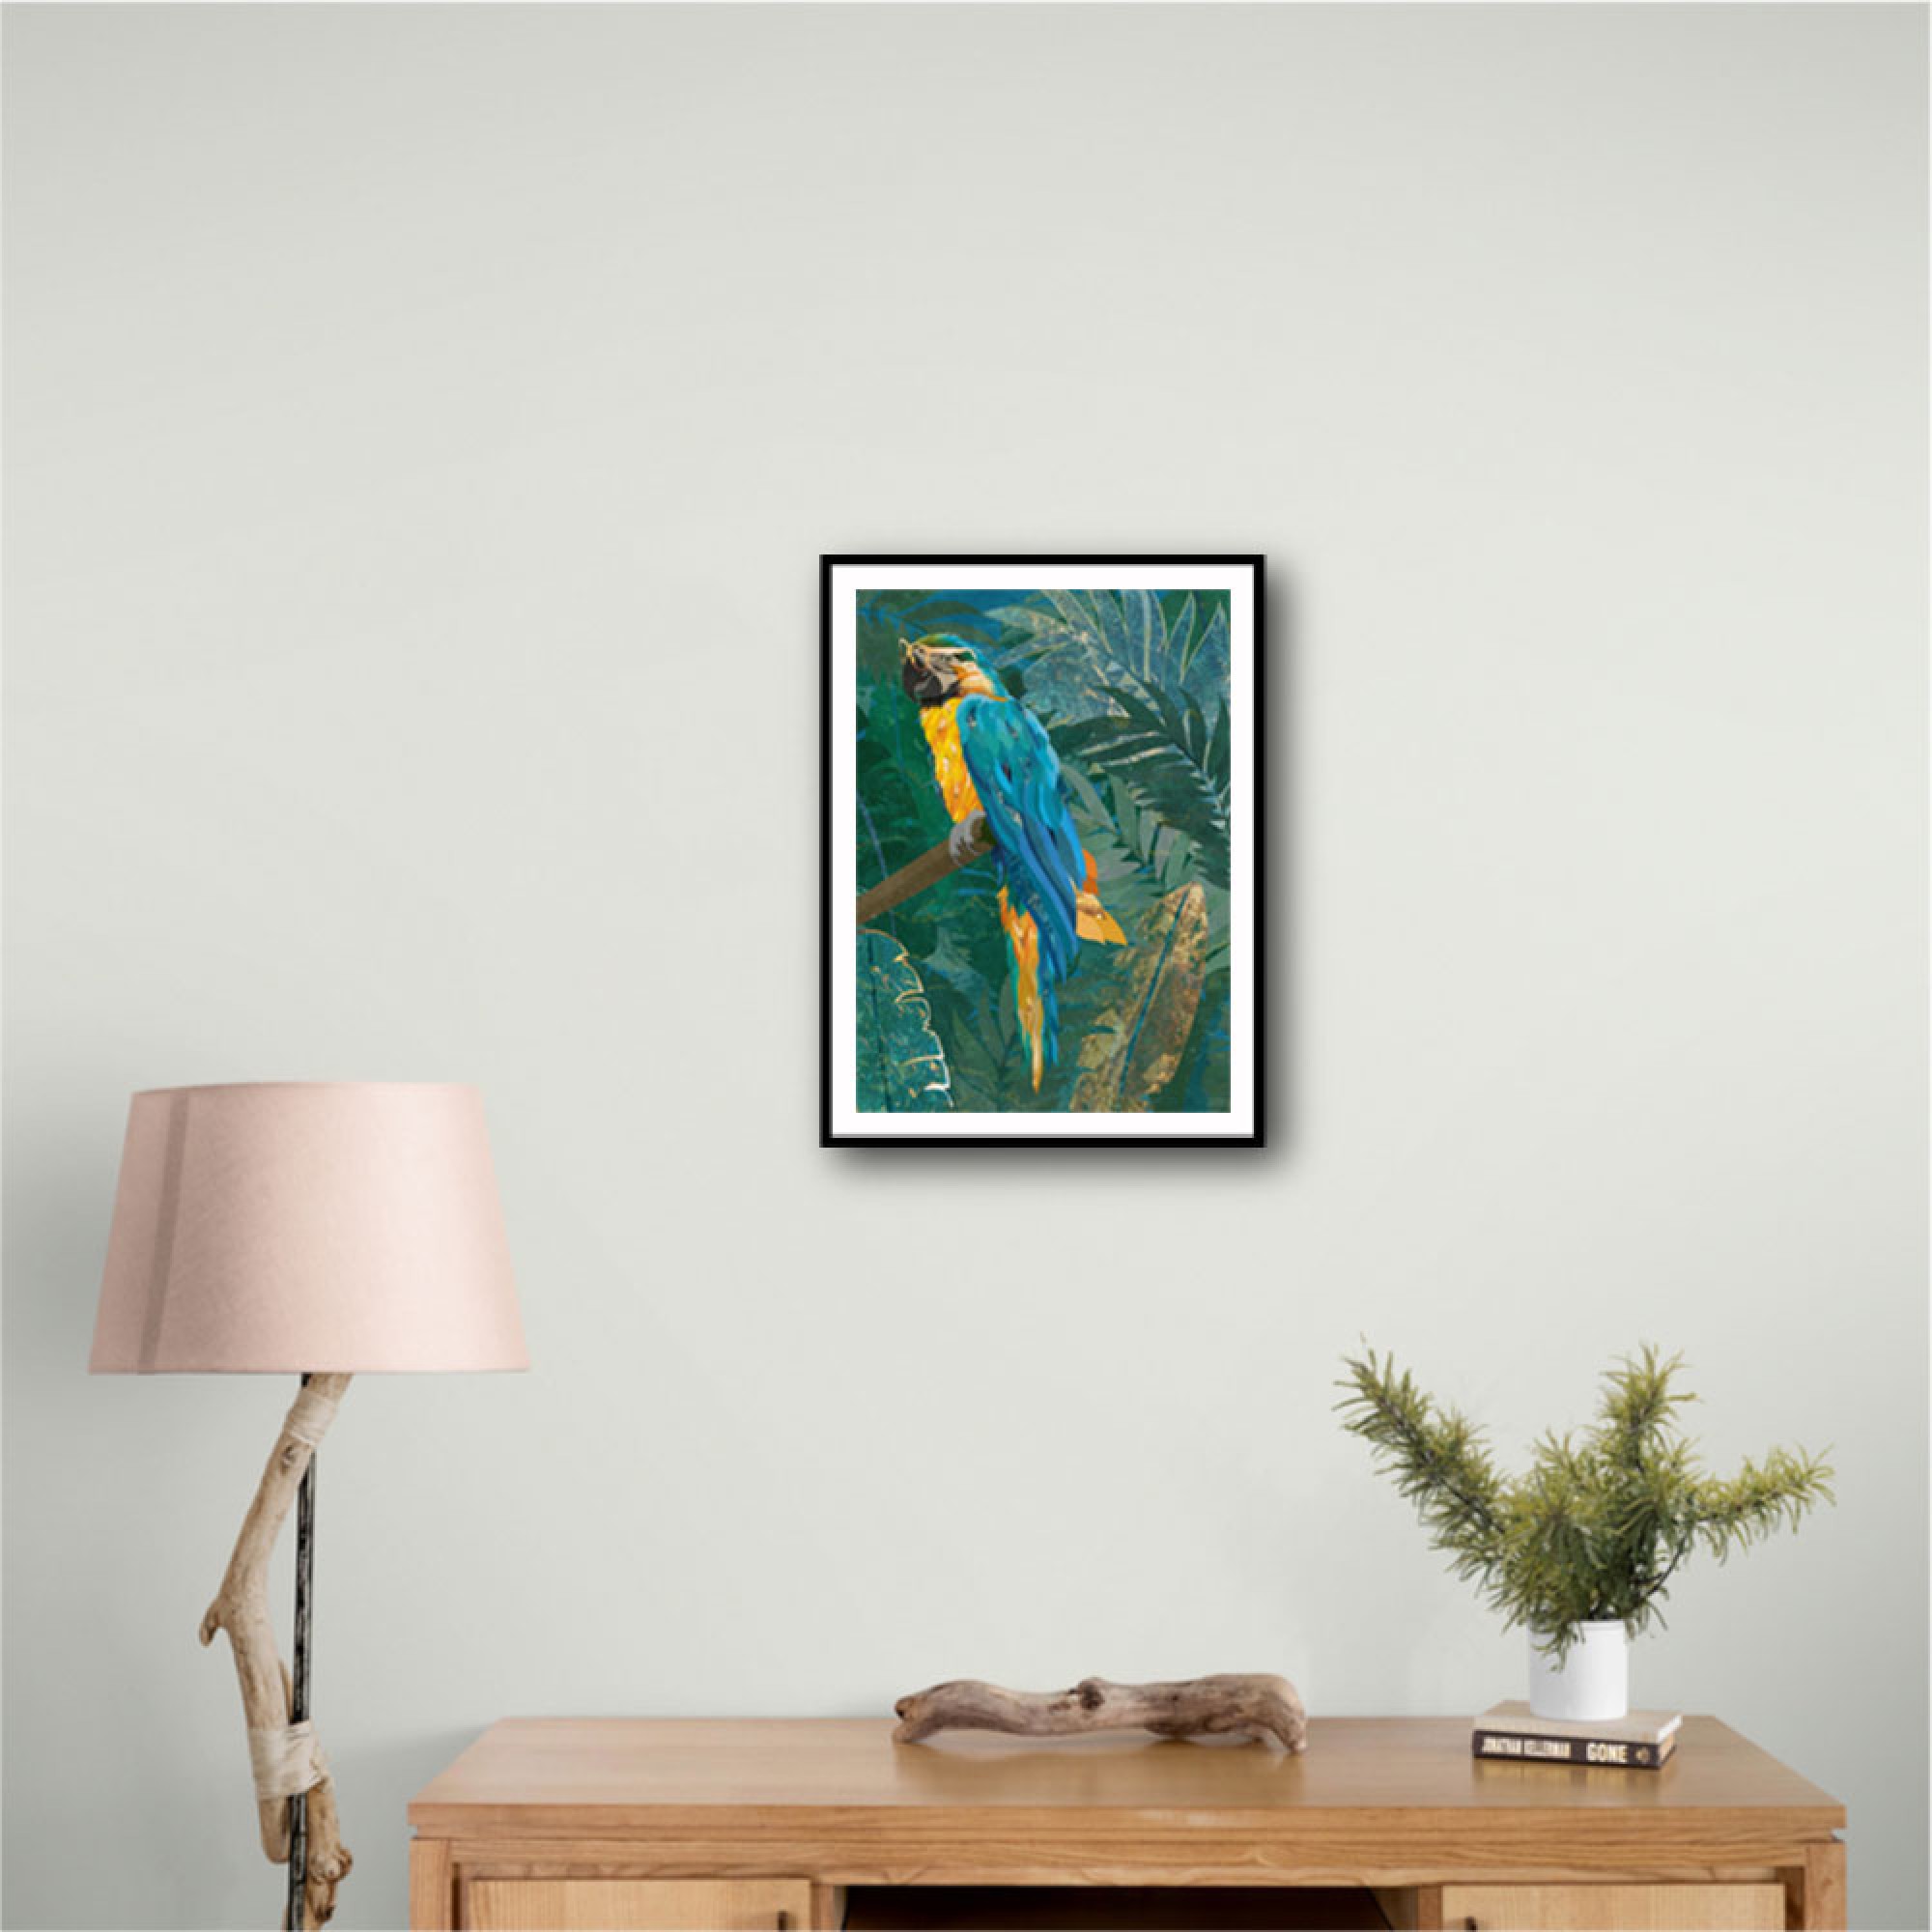 Blue Parrot In The Rainforest Wall Art